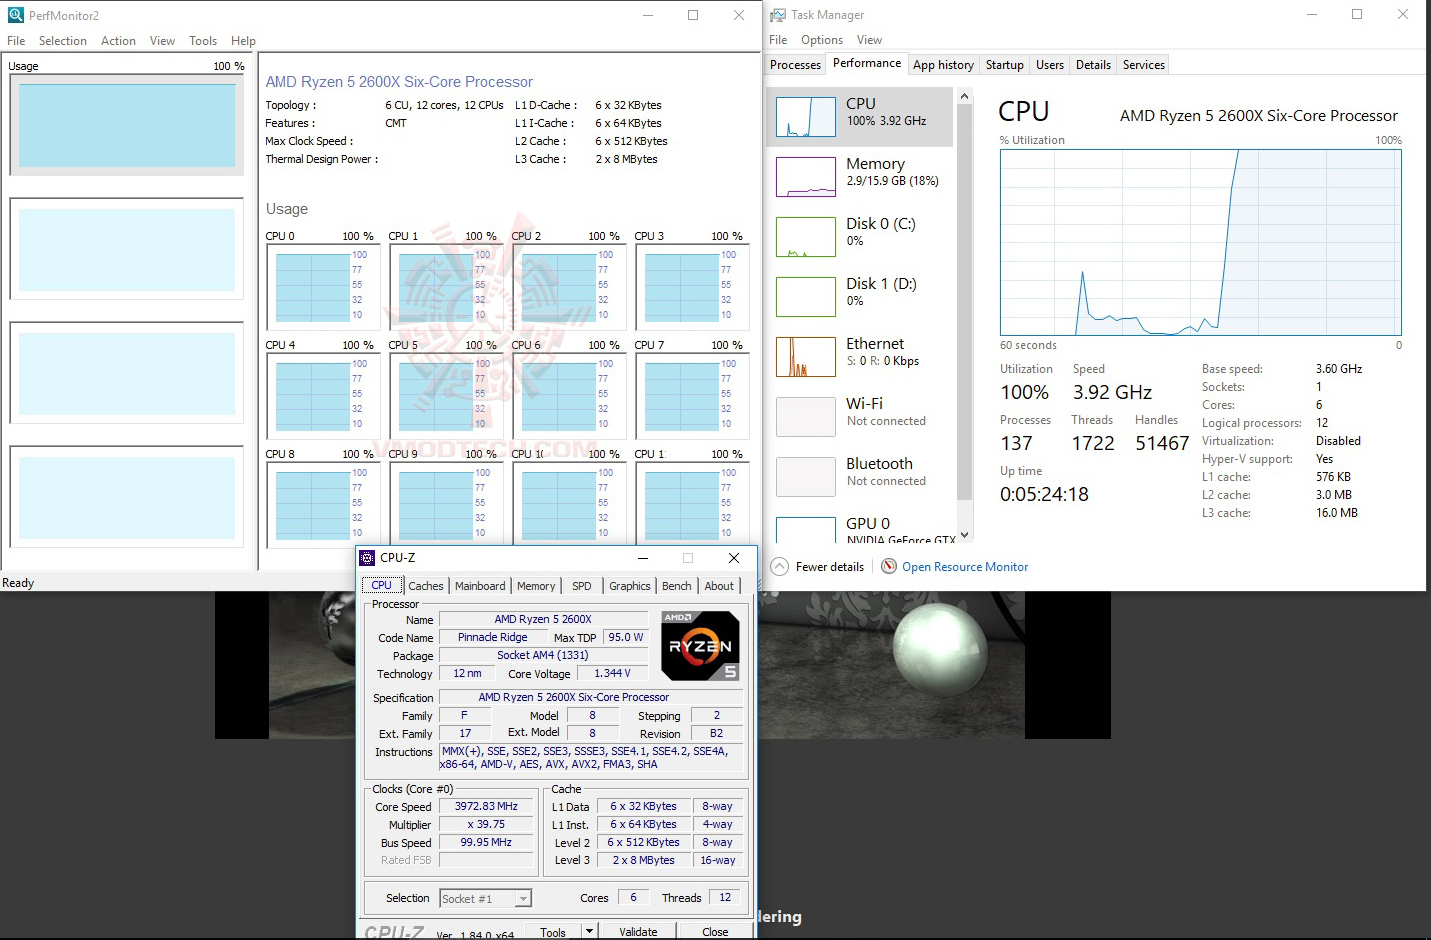 core1 AMD RYZEN 5 2600X PROCESSOR REVIEW